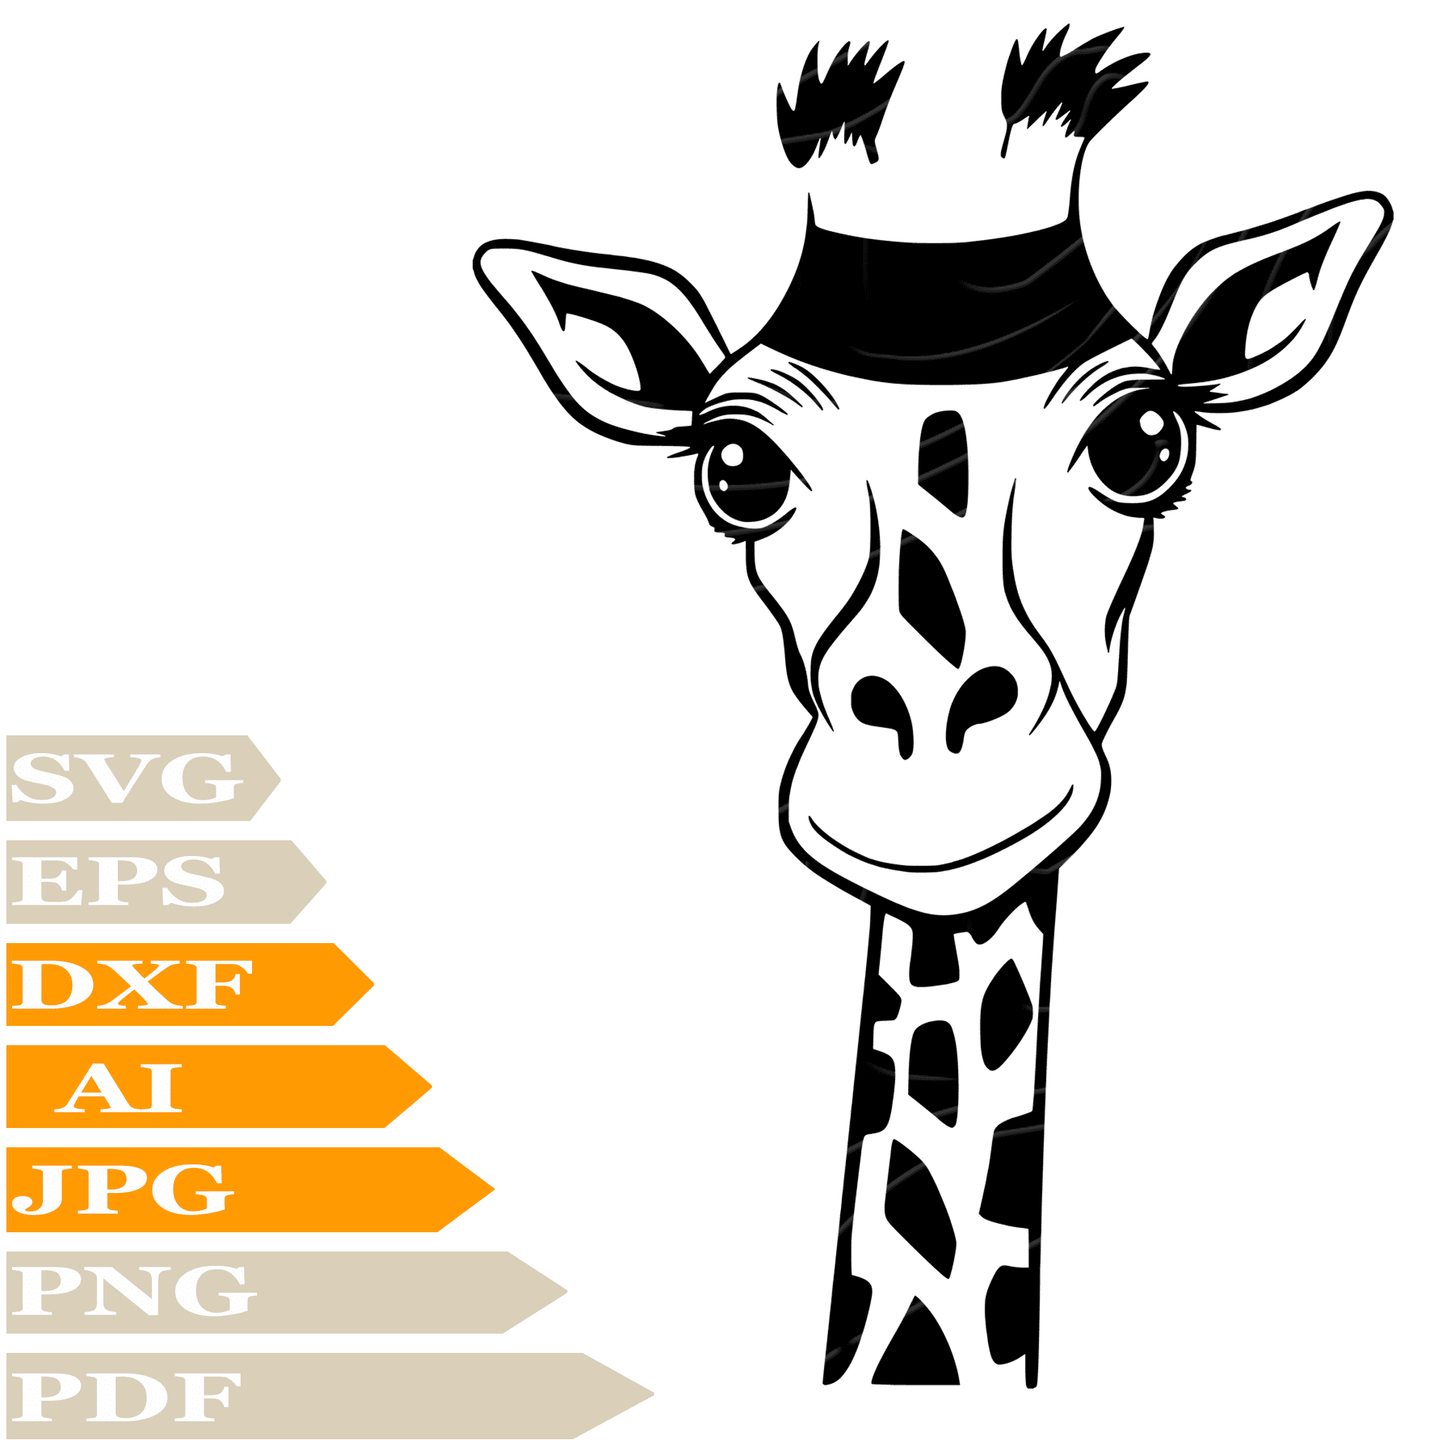 Giraffe ﻿SVG-Giraffe Face Personalized SVG-Giraffe Head Drawing SVG-Giraffe Animals Vector Illustration-PNG-Decal-Cricut-Digital Files-Clip Art-Cut File-For Shirts-Silhouette